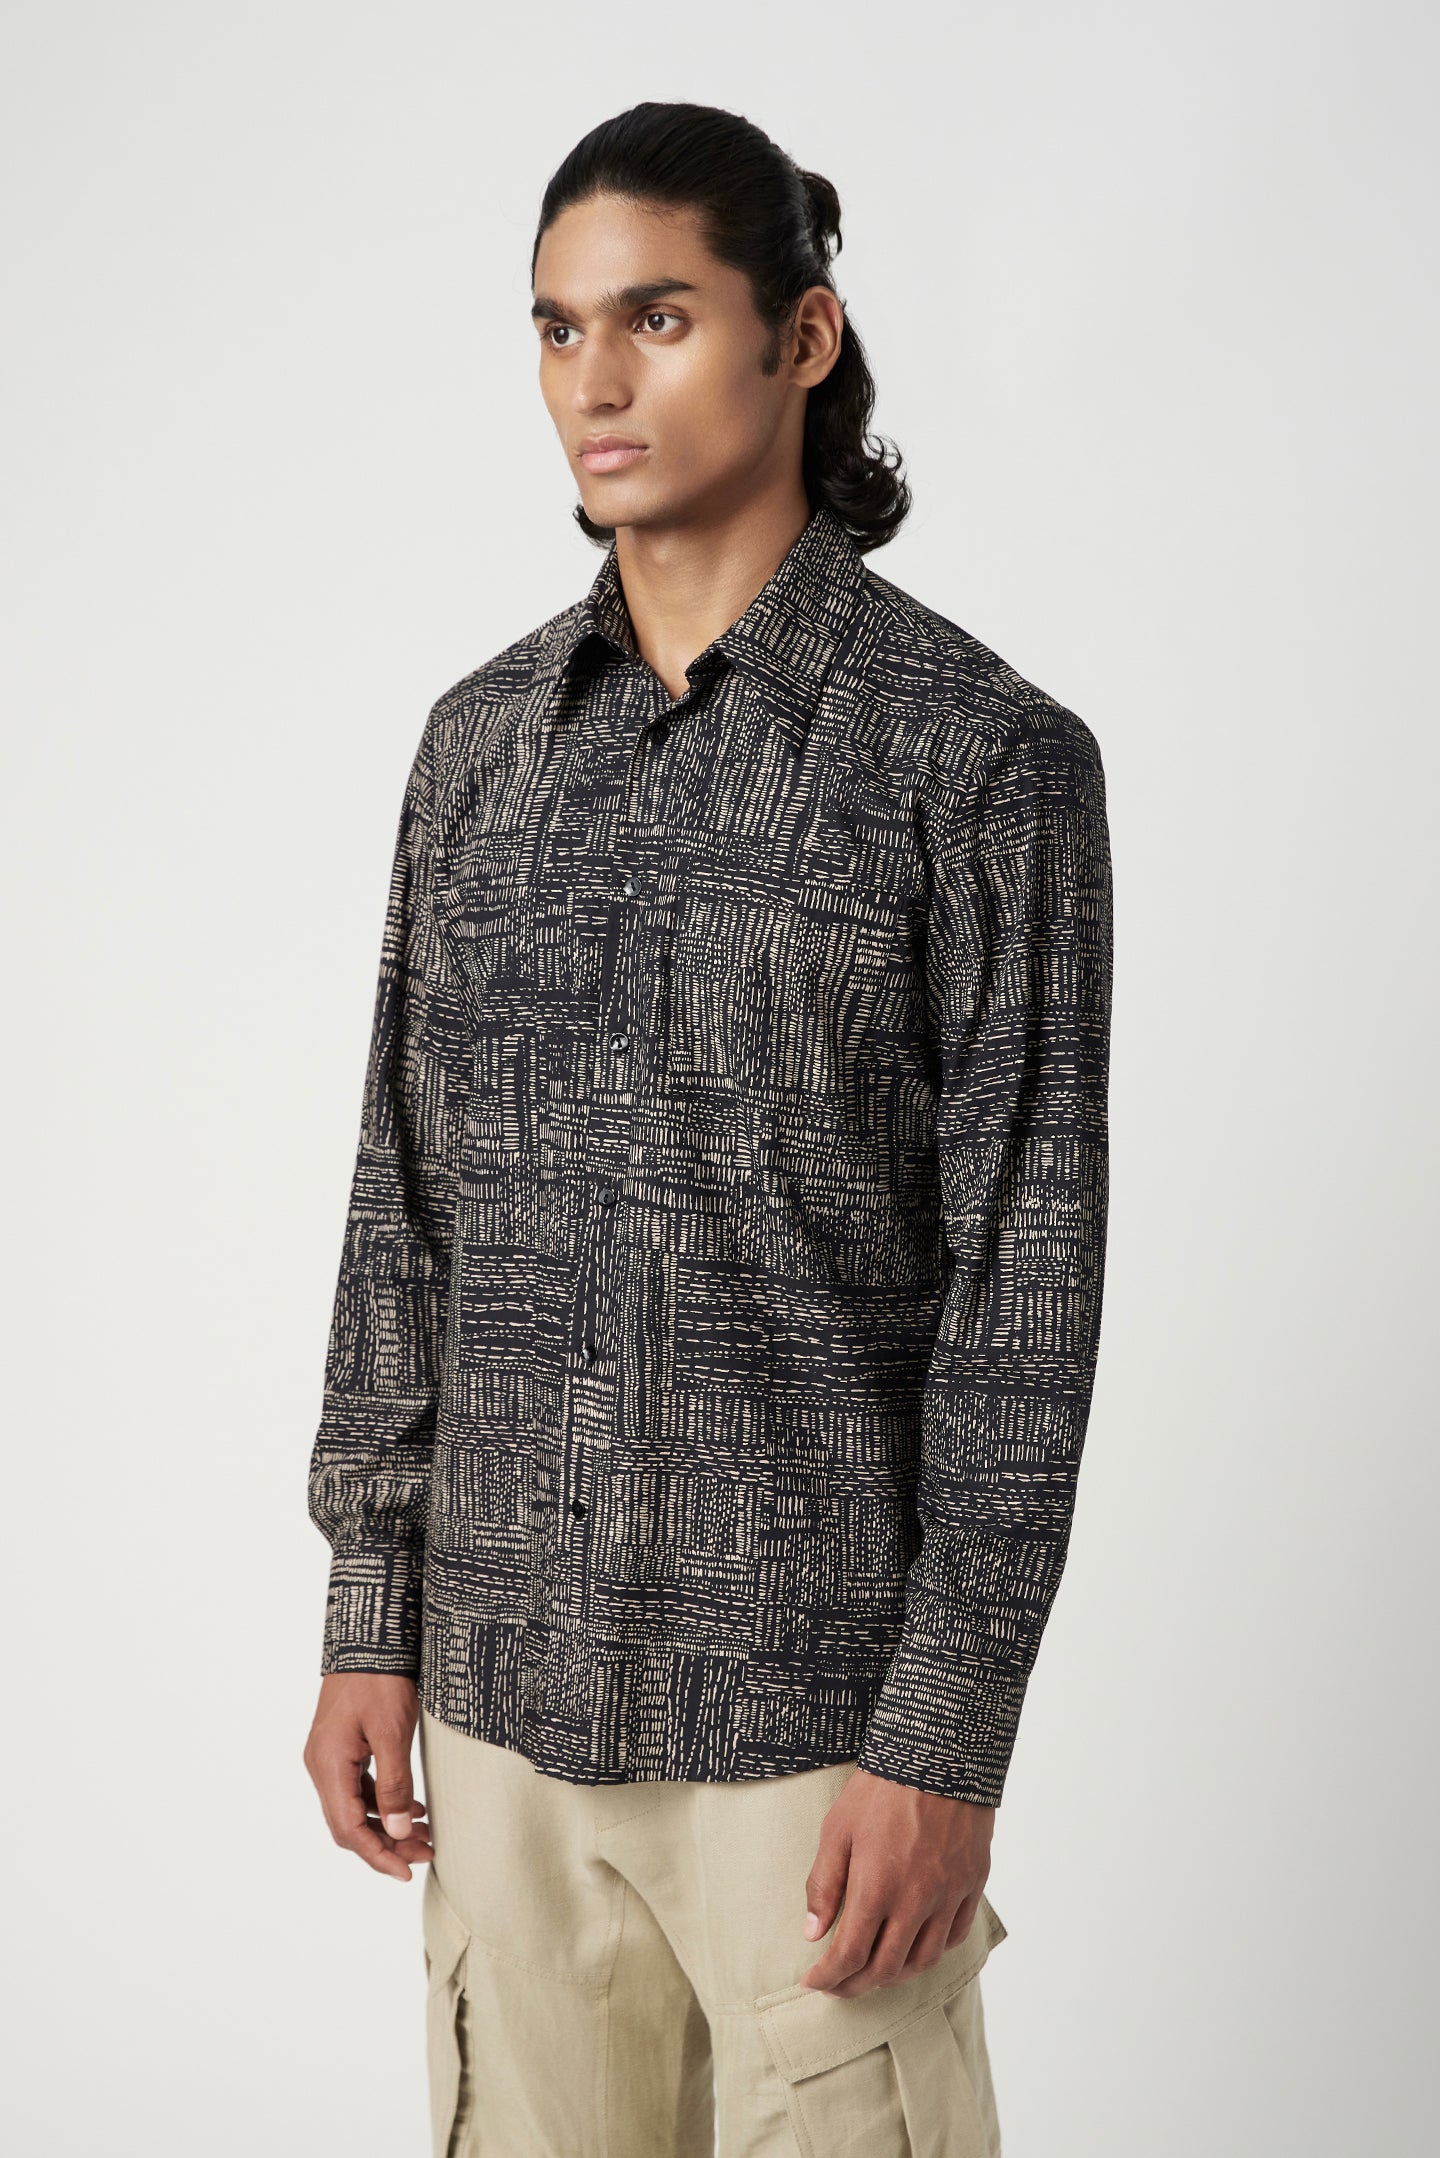 Regular Fit Button-Down Shirt in an All-Over Kantha Print